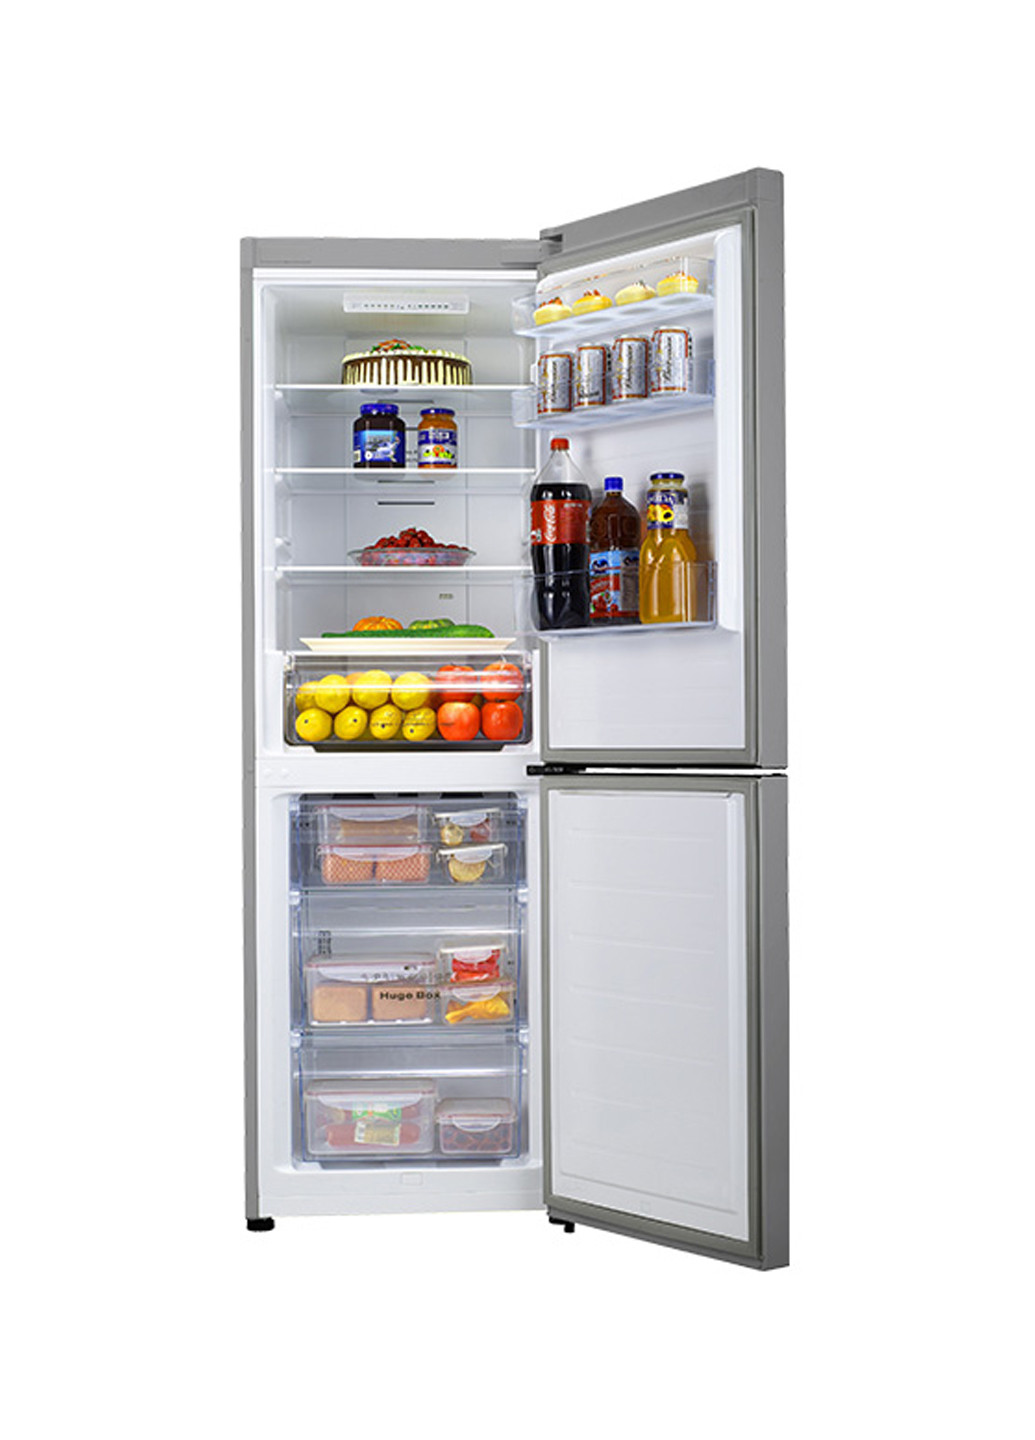 Холодильник RD-35DC4SUA / CVA1 Hisense rd-35dc4sua/cva1 (131079659)